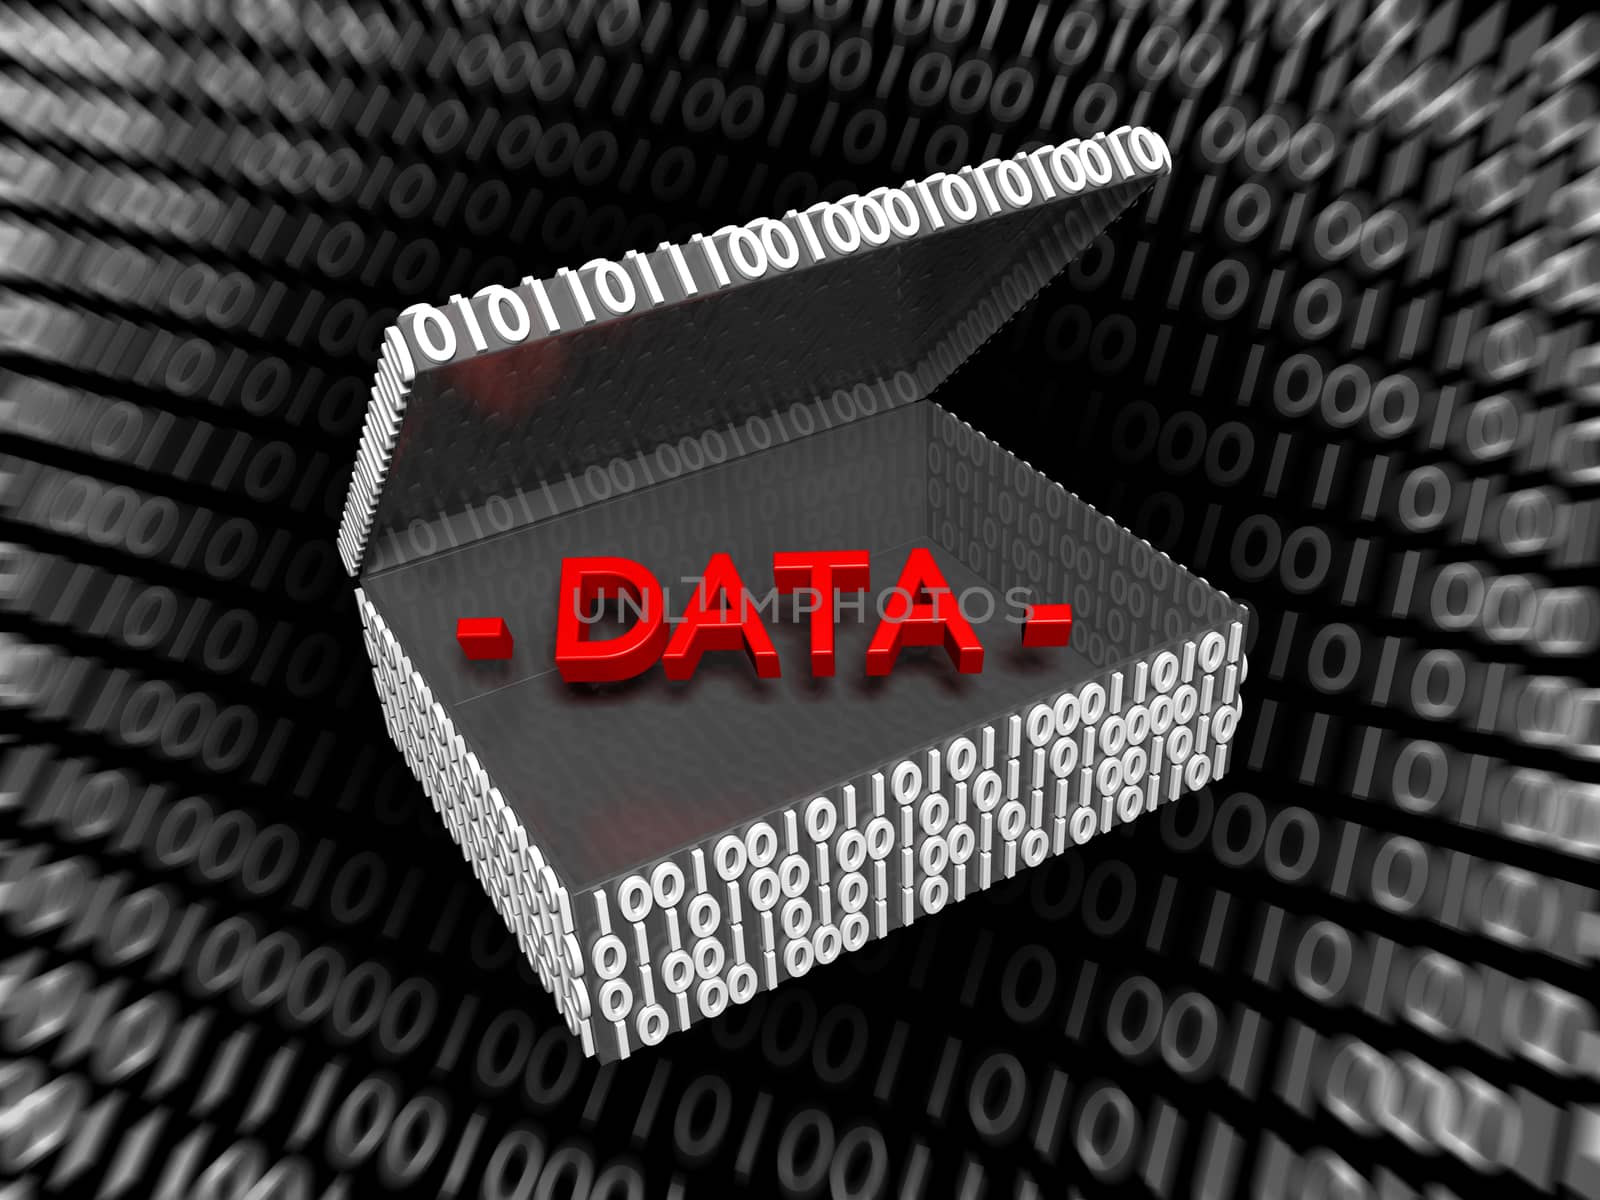 Data in a Digital Box by shkyo30